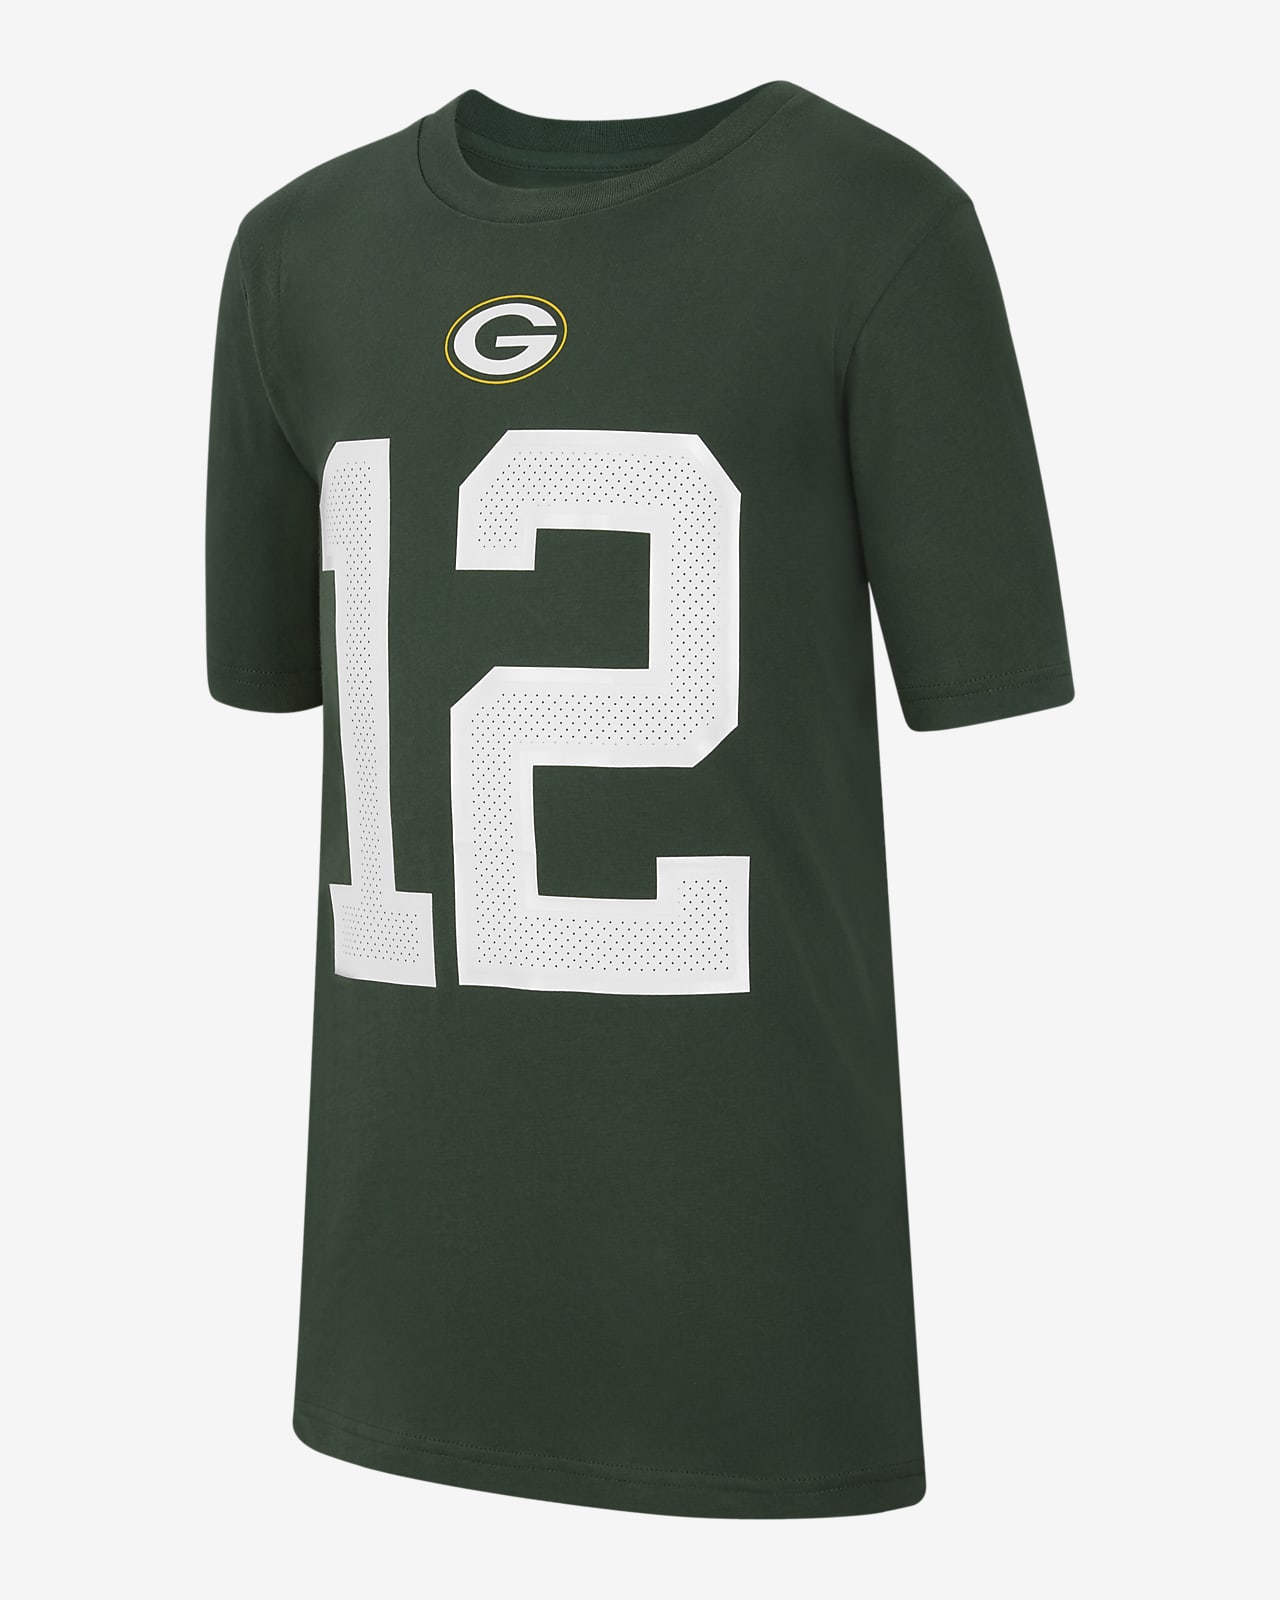 Nike (NFL Green Bay Packers) Samarreta - Nen/a